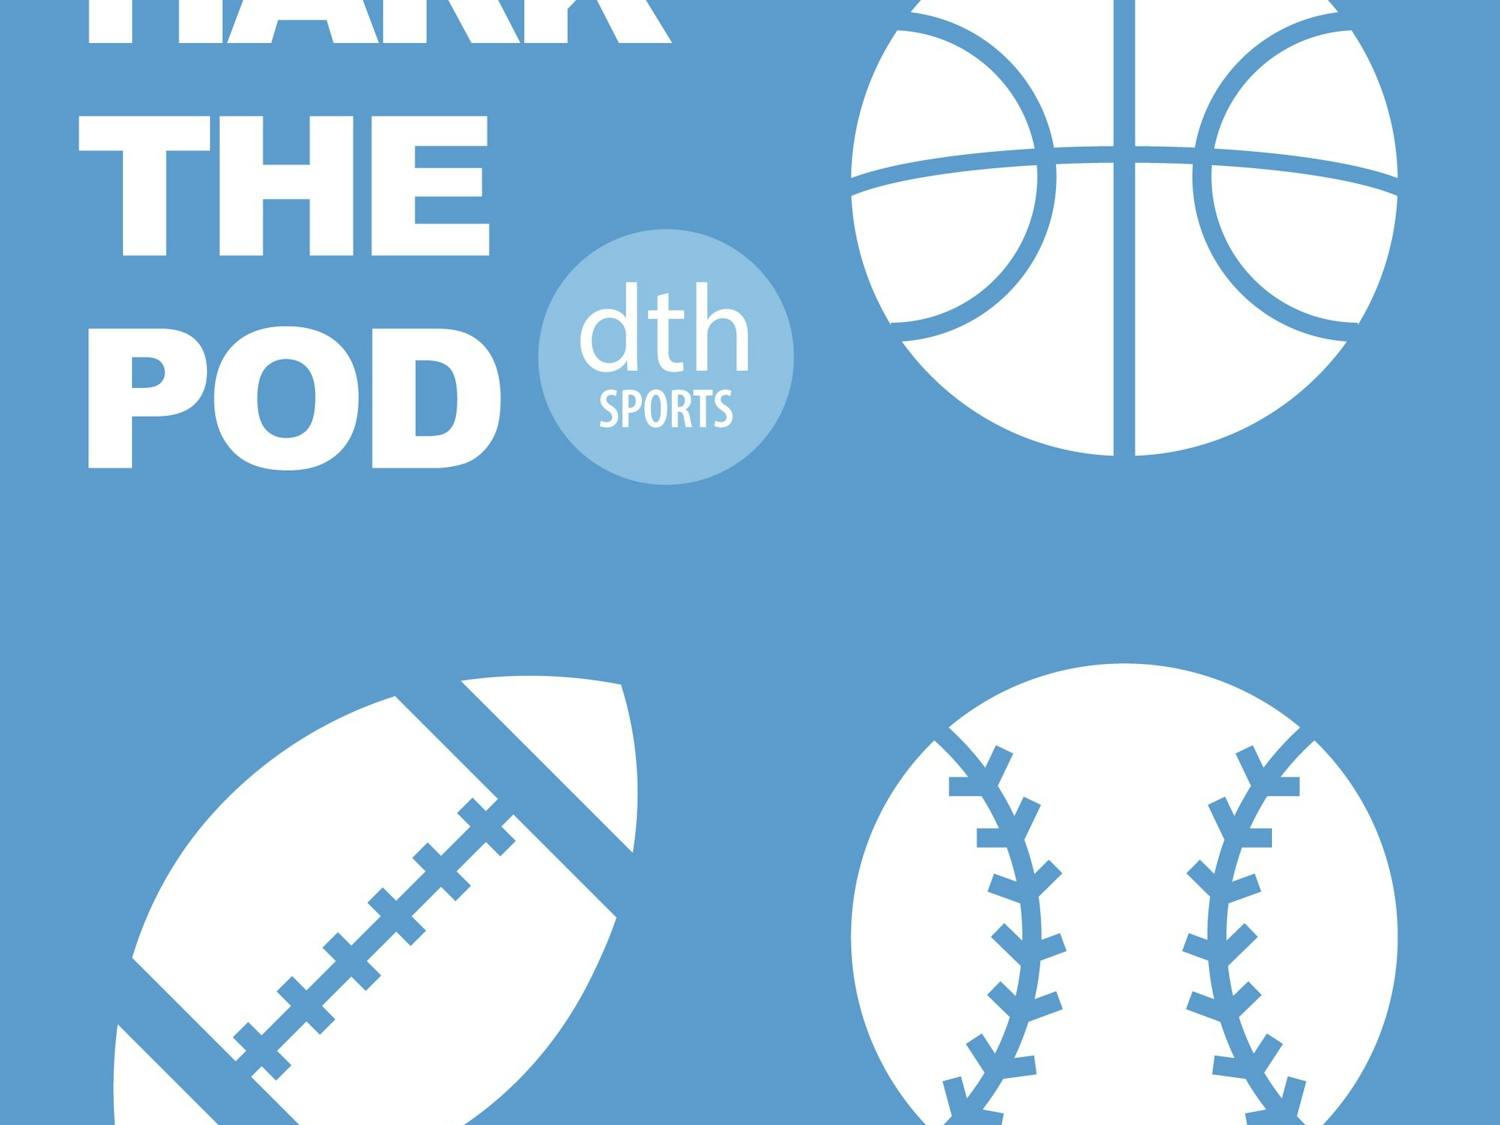 Hark The Pod logo.jpg